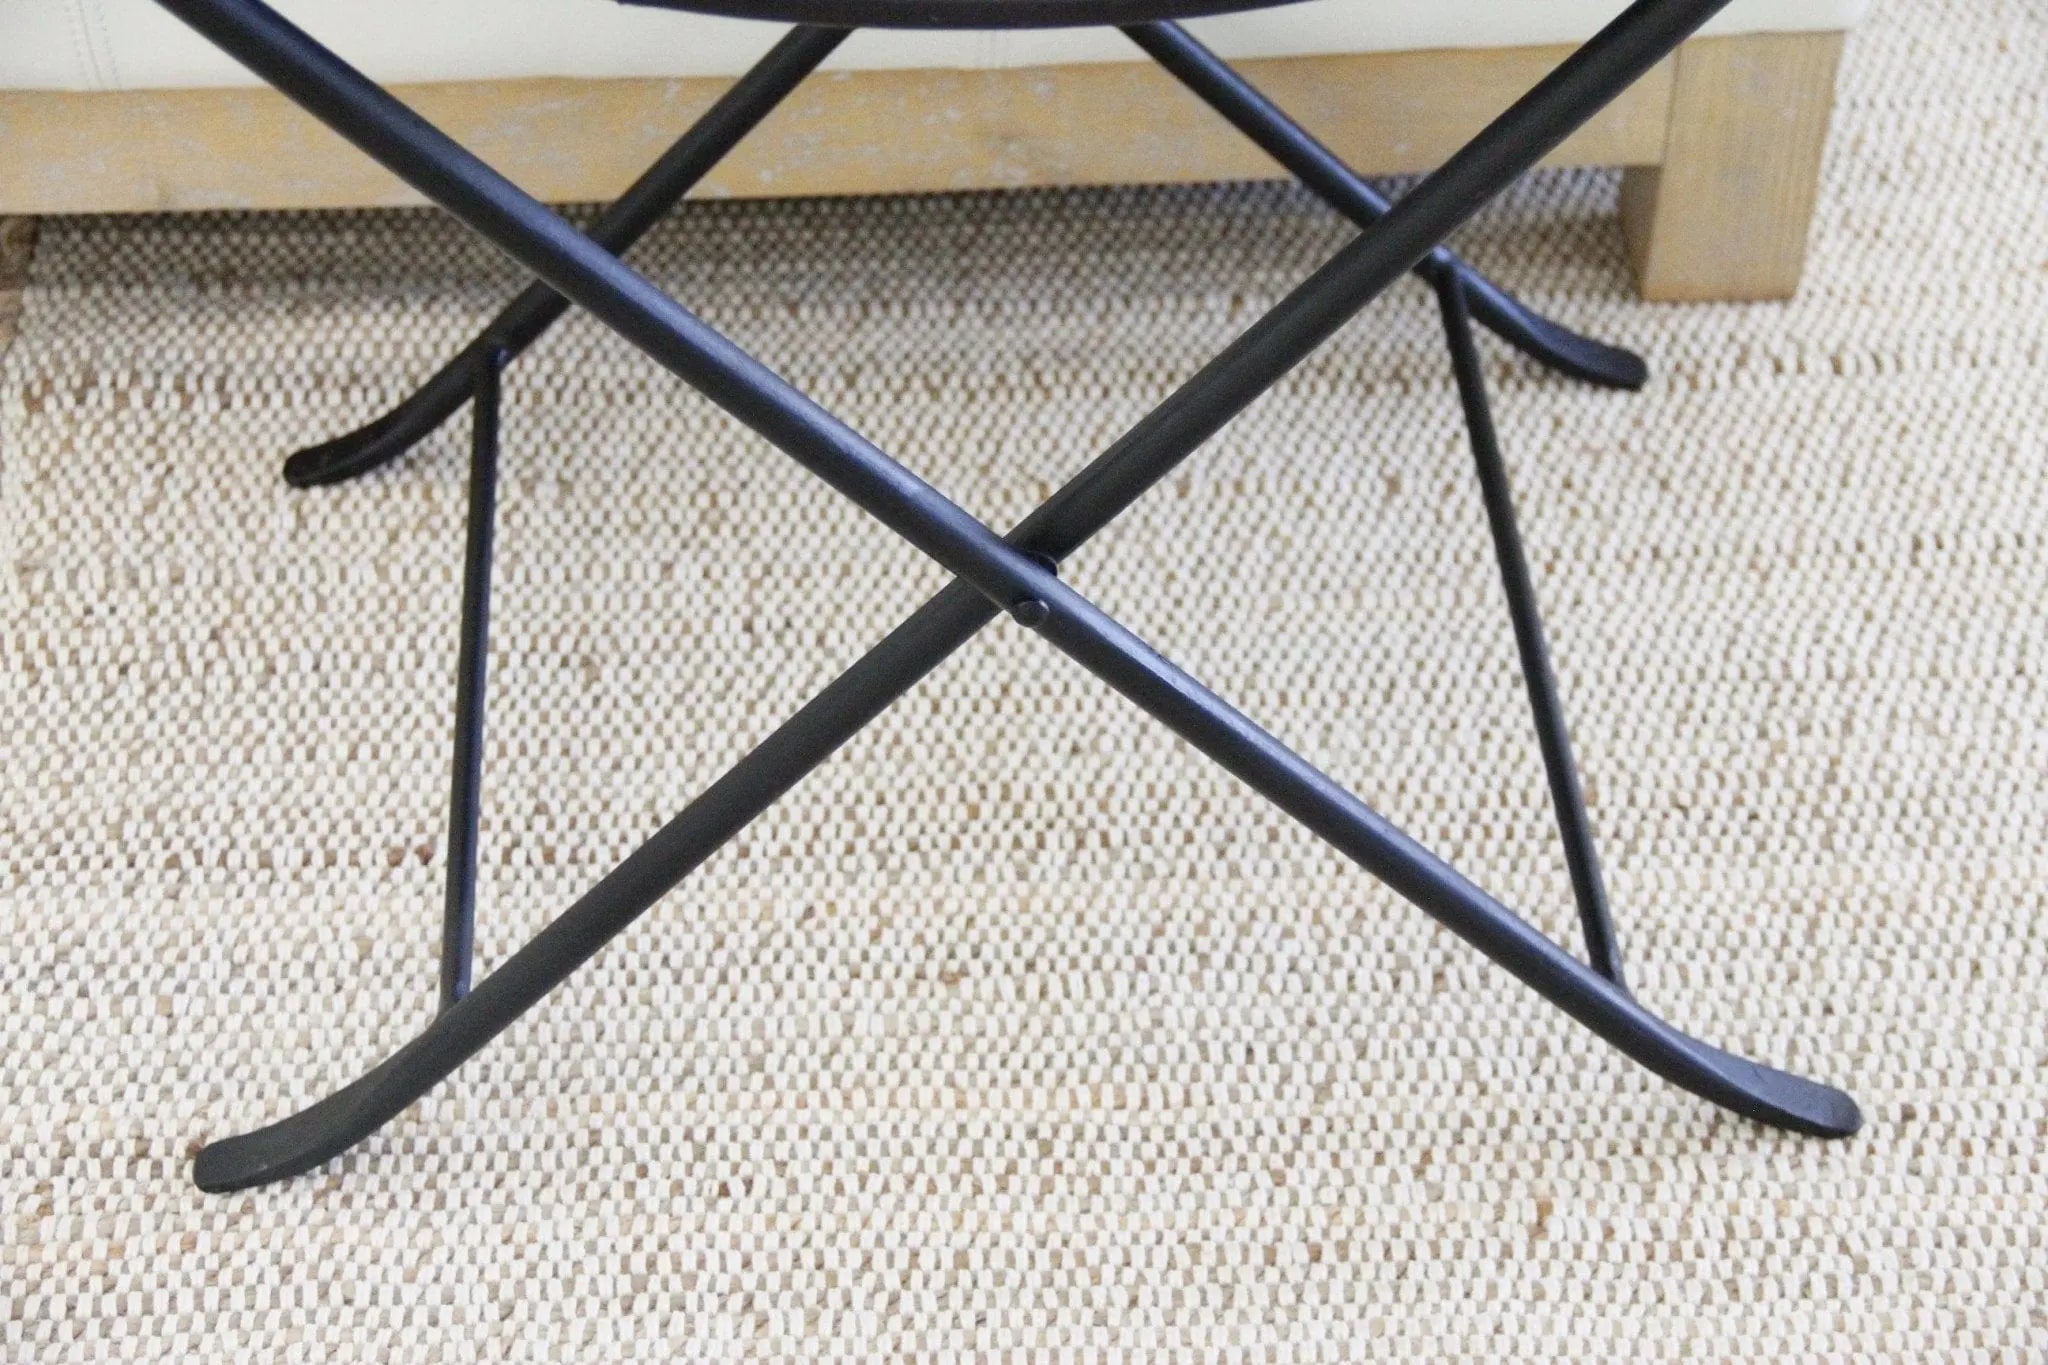 Black Iron and Leather Folding Bench | Upholstered  Debra Hall Lifestyle